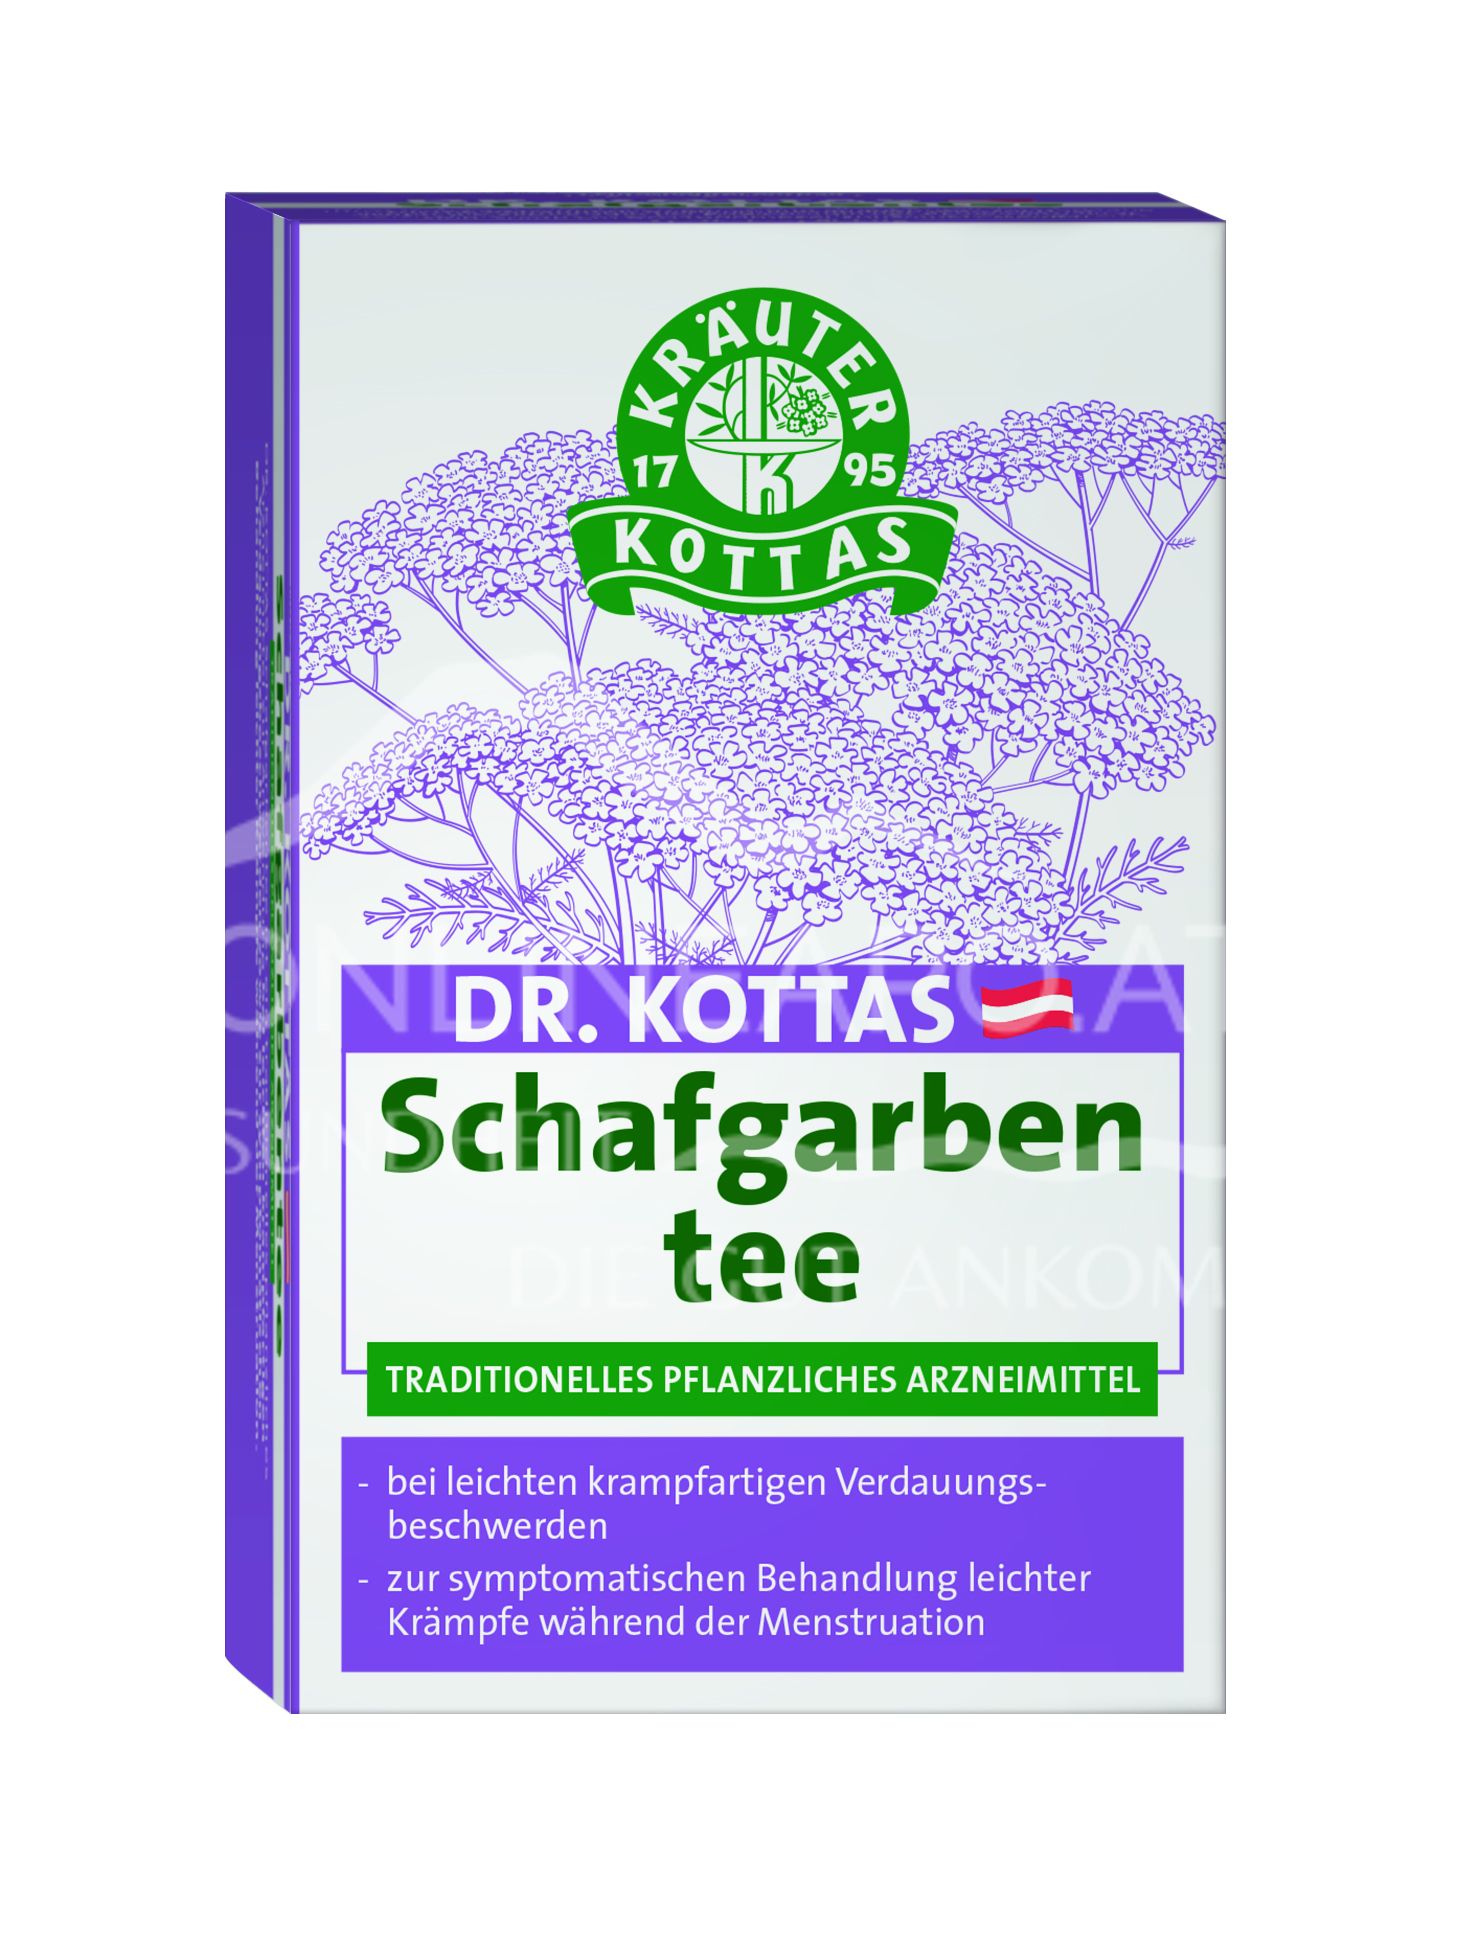 Dr. Kottas Schafgarbentee